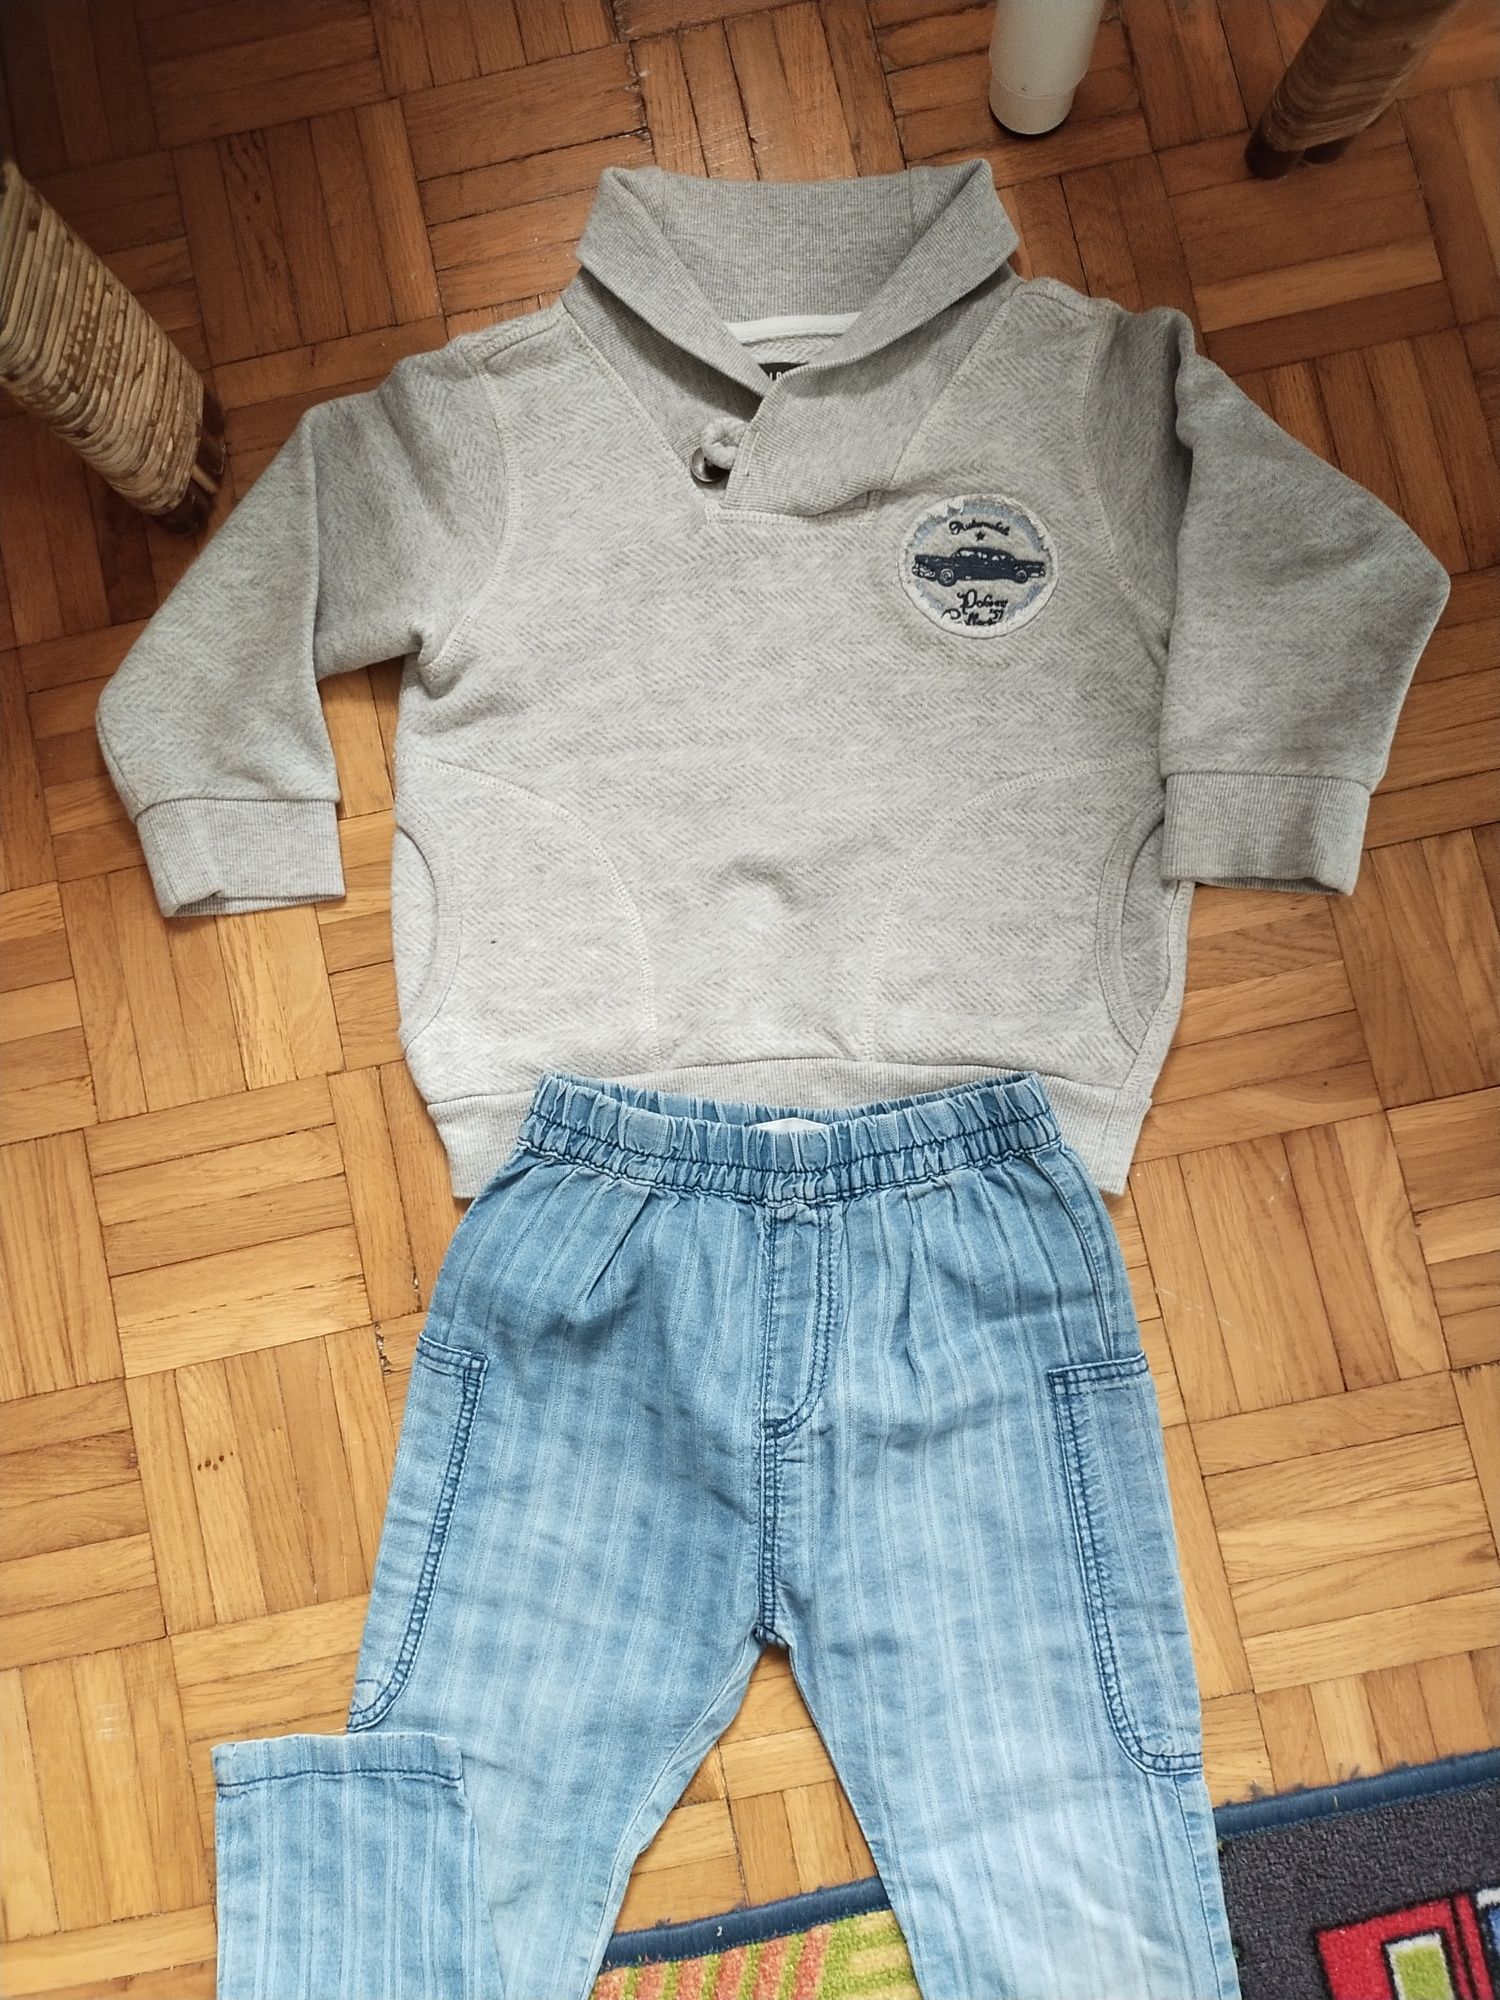 Bluza/sweterek h&m i jeansy Zara 98/104 + bluza